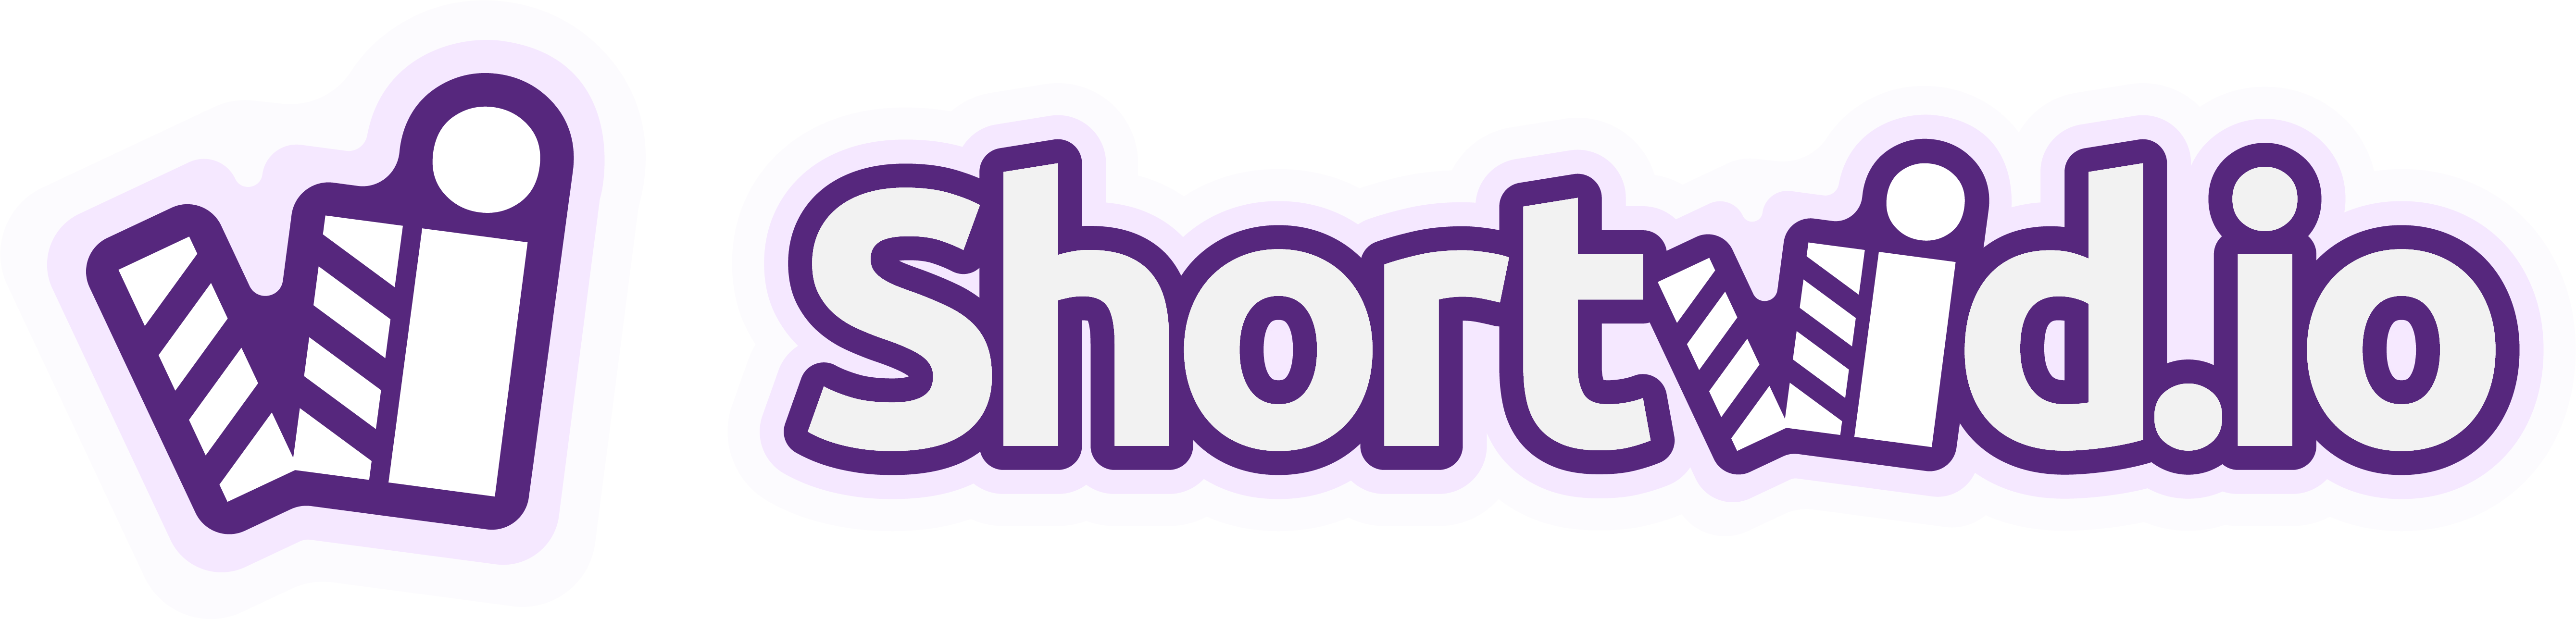 Shortvid.io logo